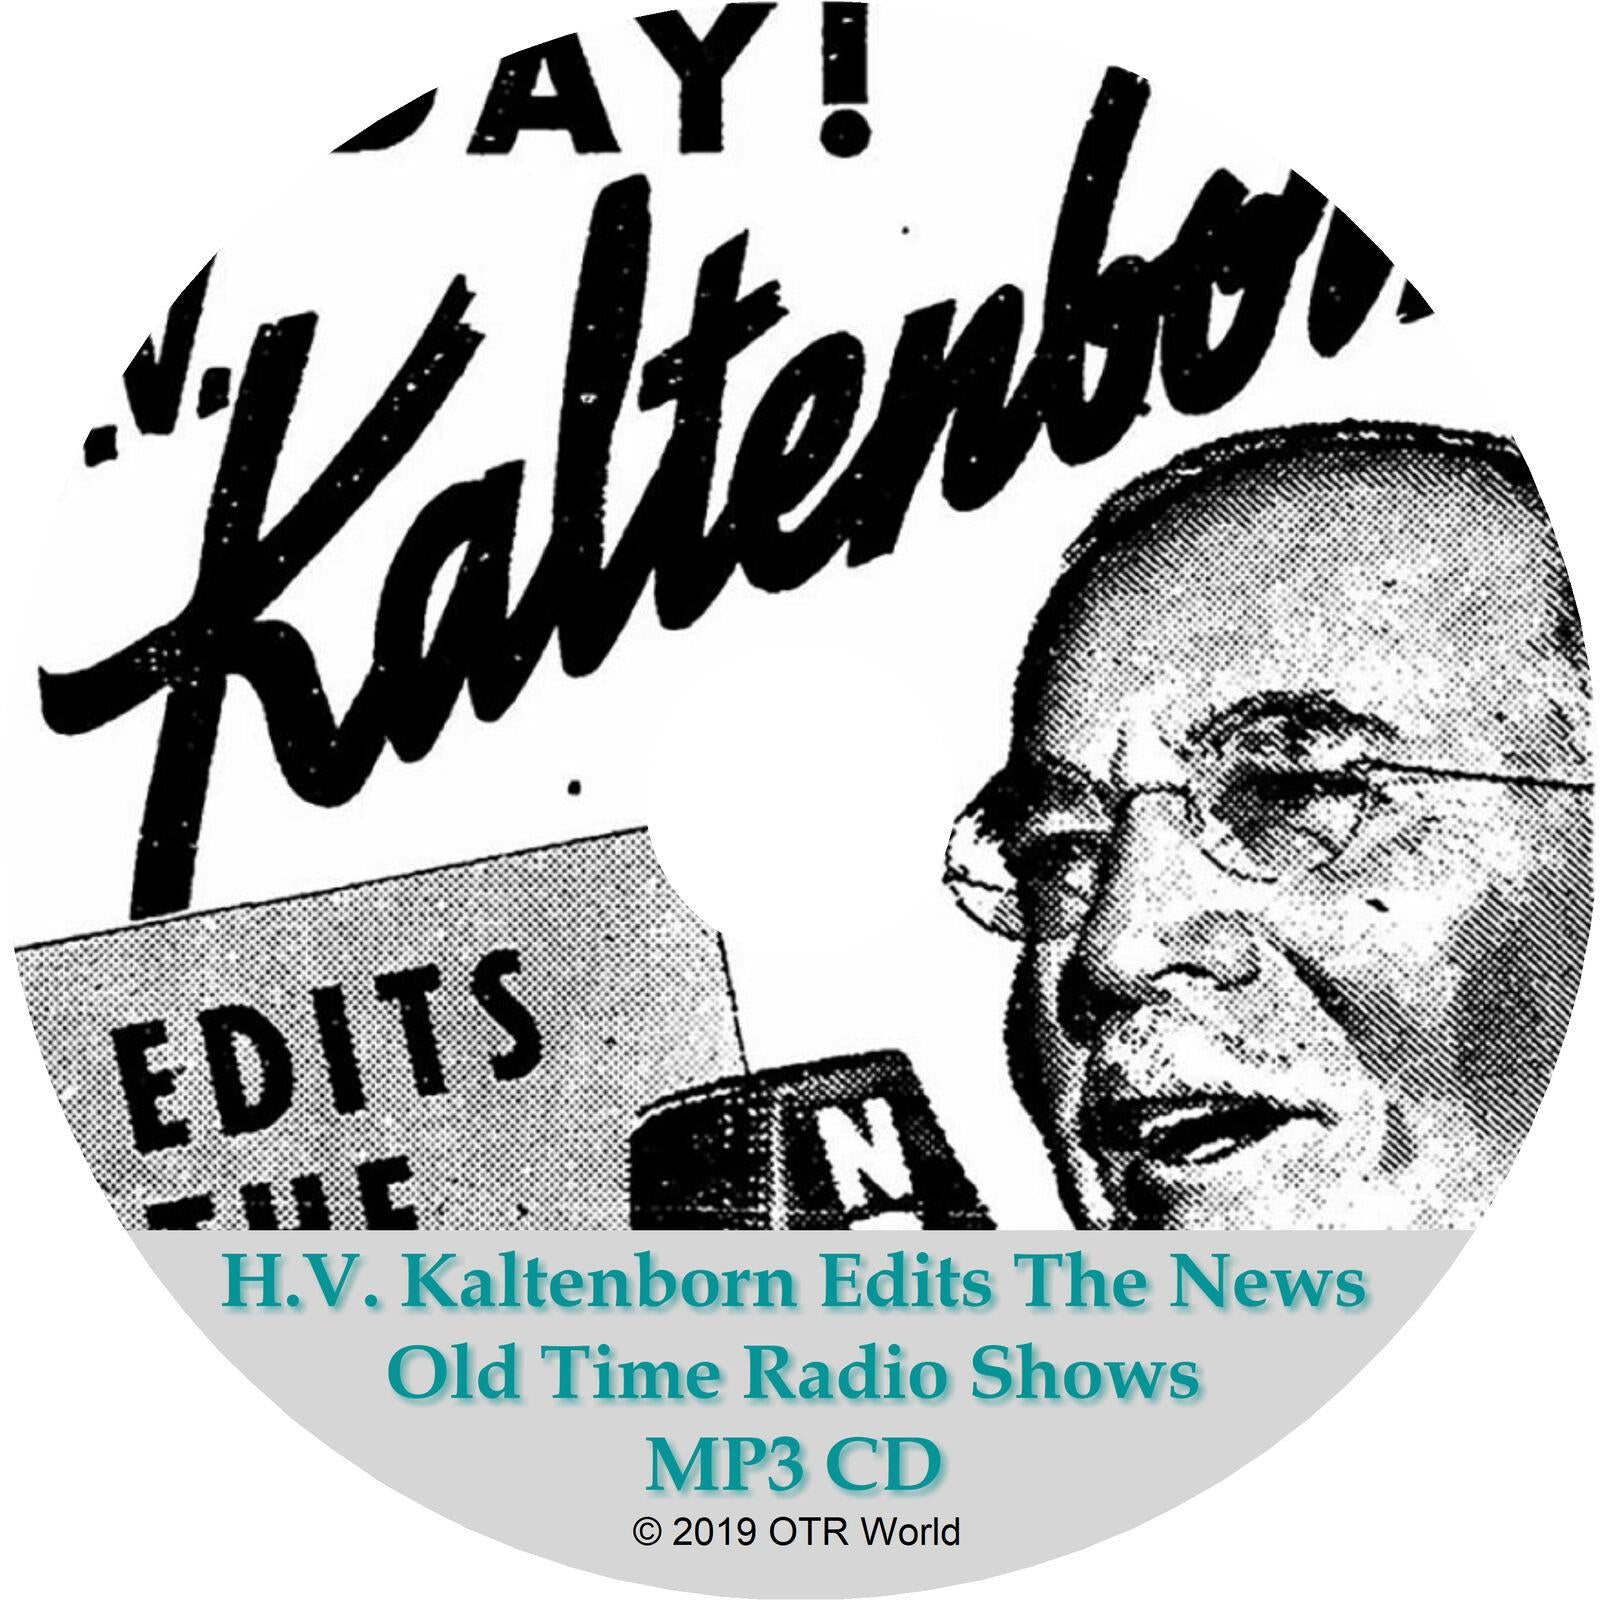 H.V. Kaltenborn Edits The News Old Time Radio Shows OTR MP3 CD CD-R 34 Episodes